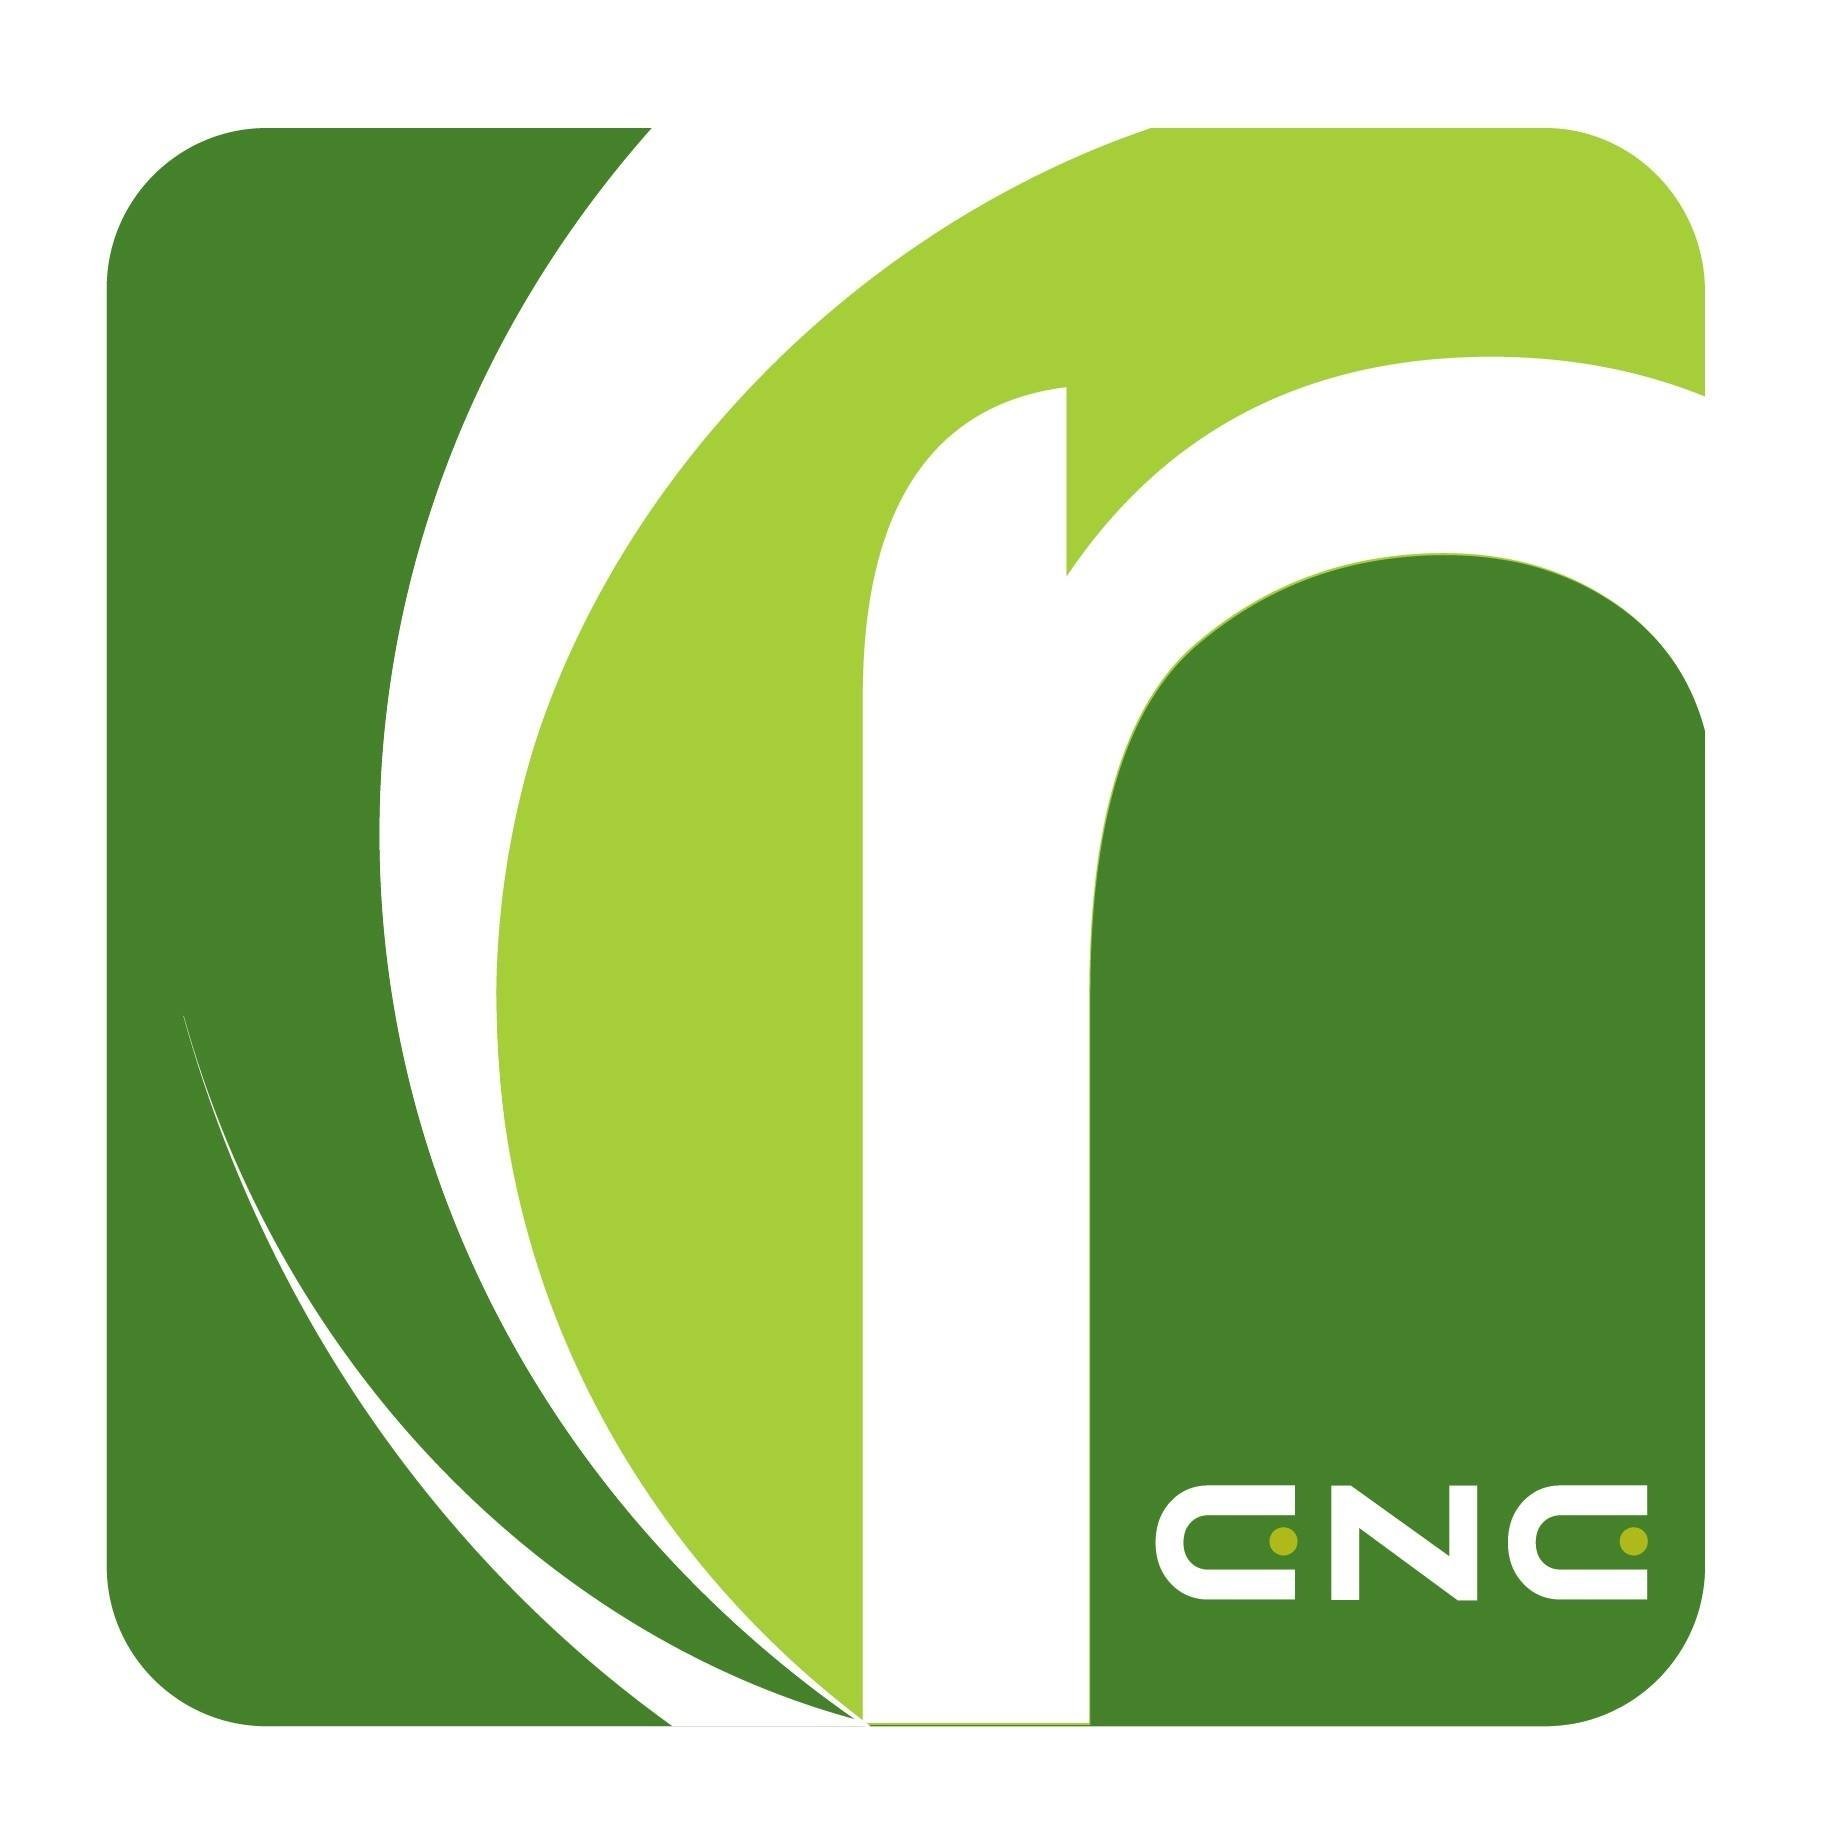 CNC INTERNATIONAL NUTRITION JOINT STOCK COMPANY